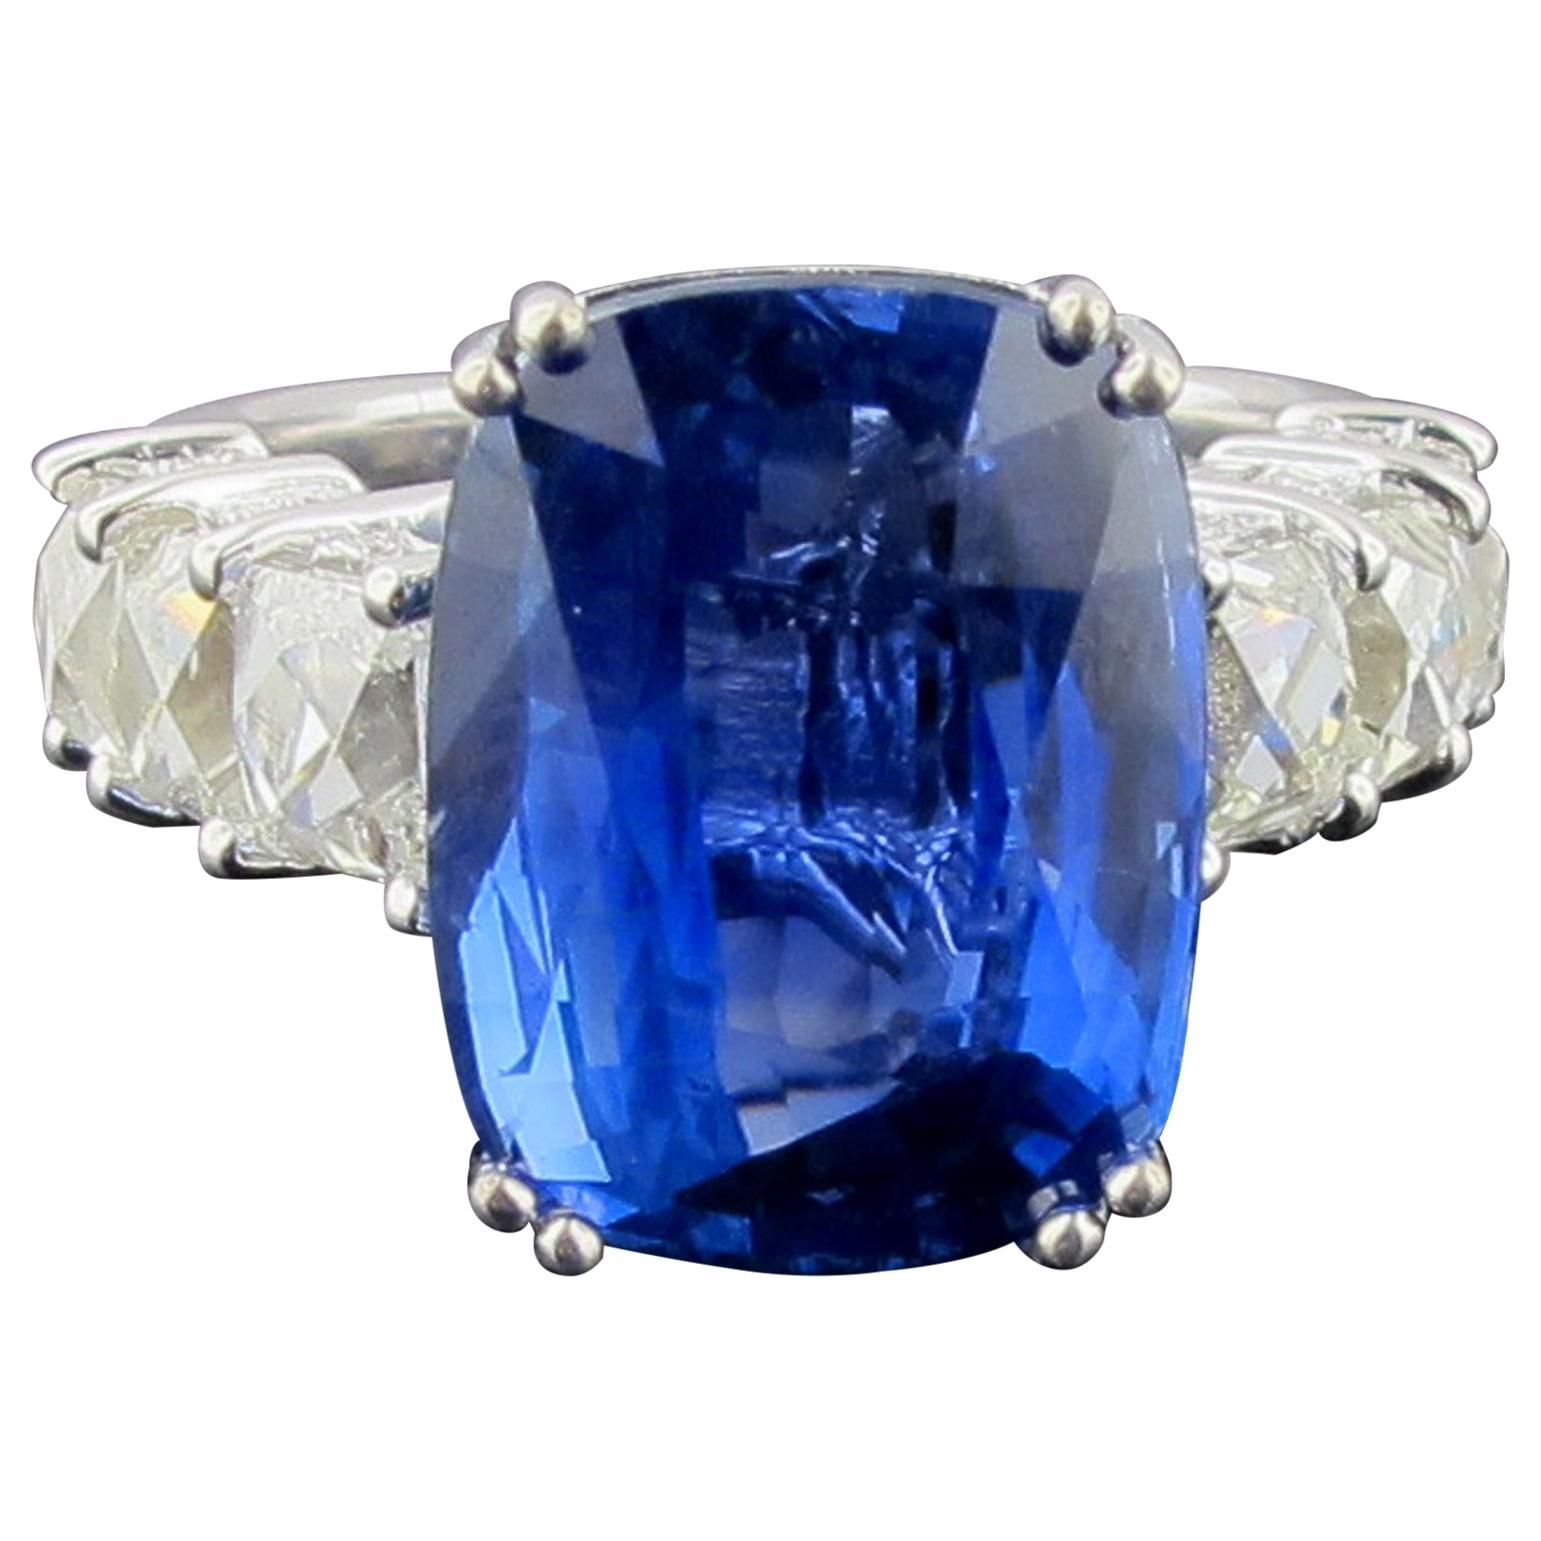 GIA Certified 13.97 Carat Burma No-Heat Blue Sapphire Diamond Ring in Platinum